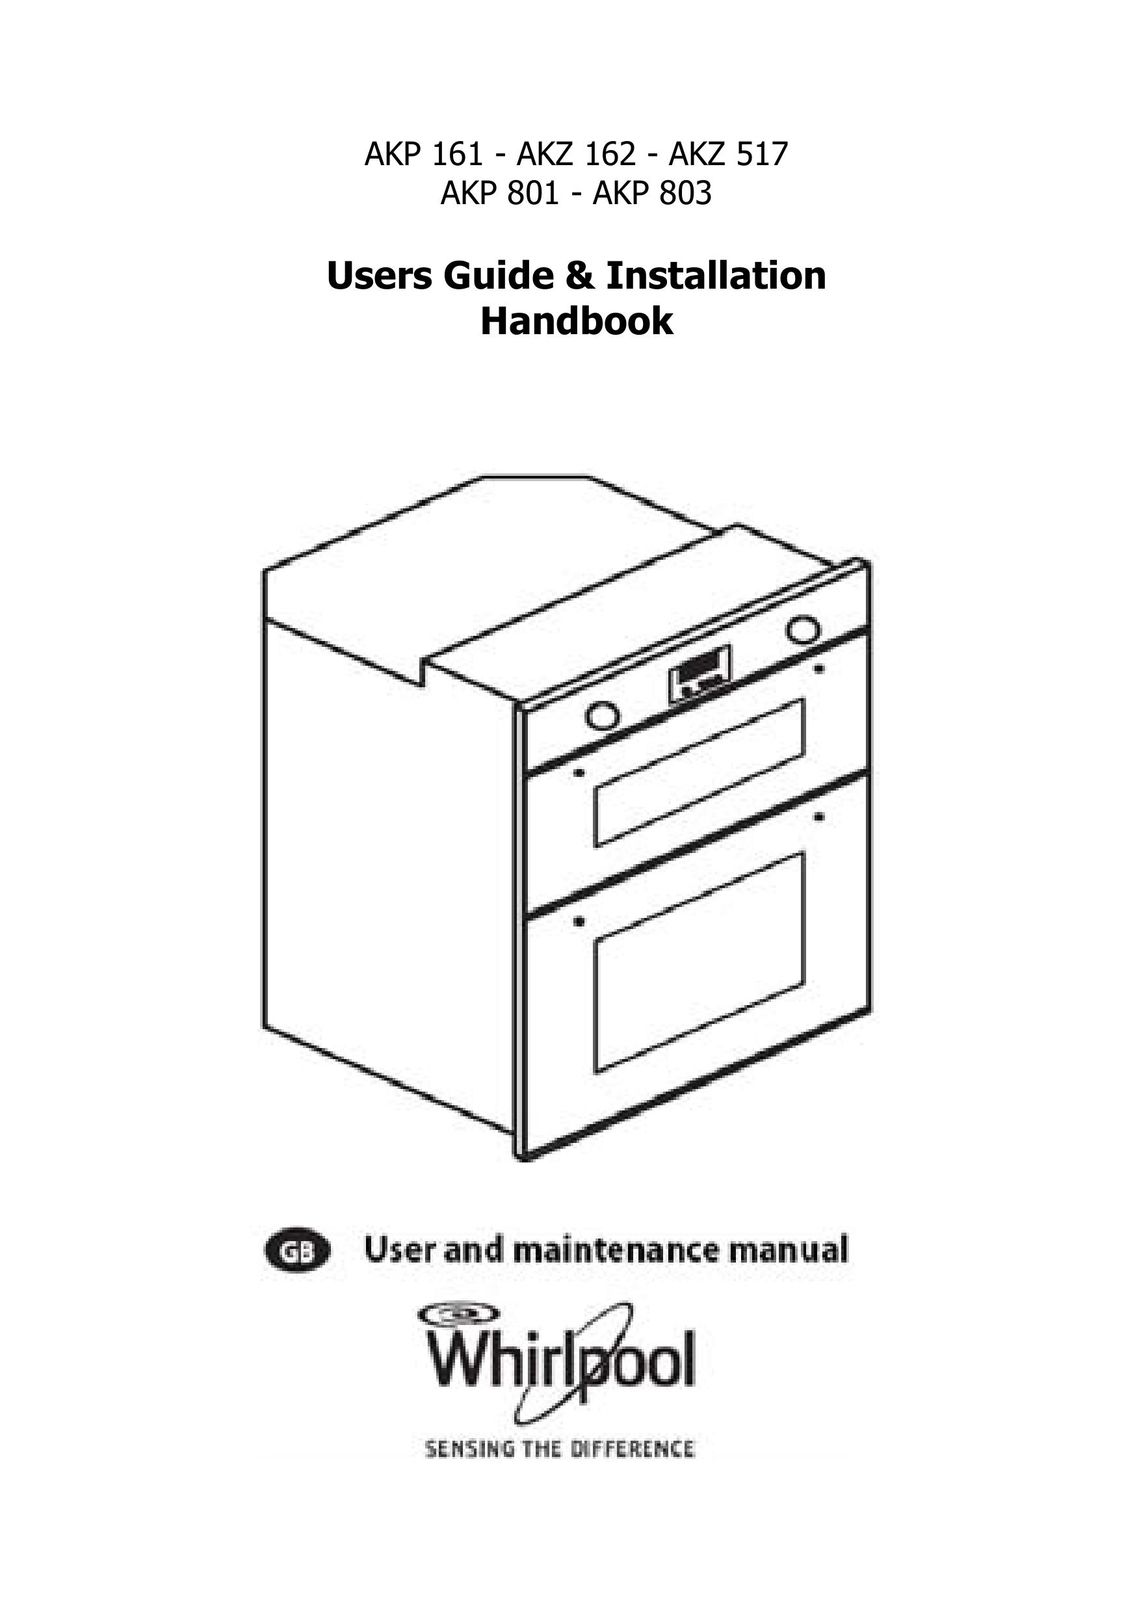 Whirlpool AKZ 517 Appliance Trim Kit User Manual